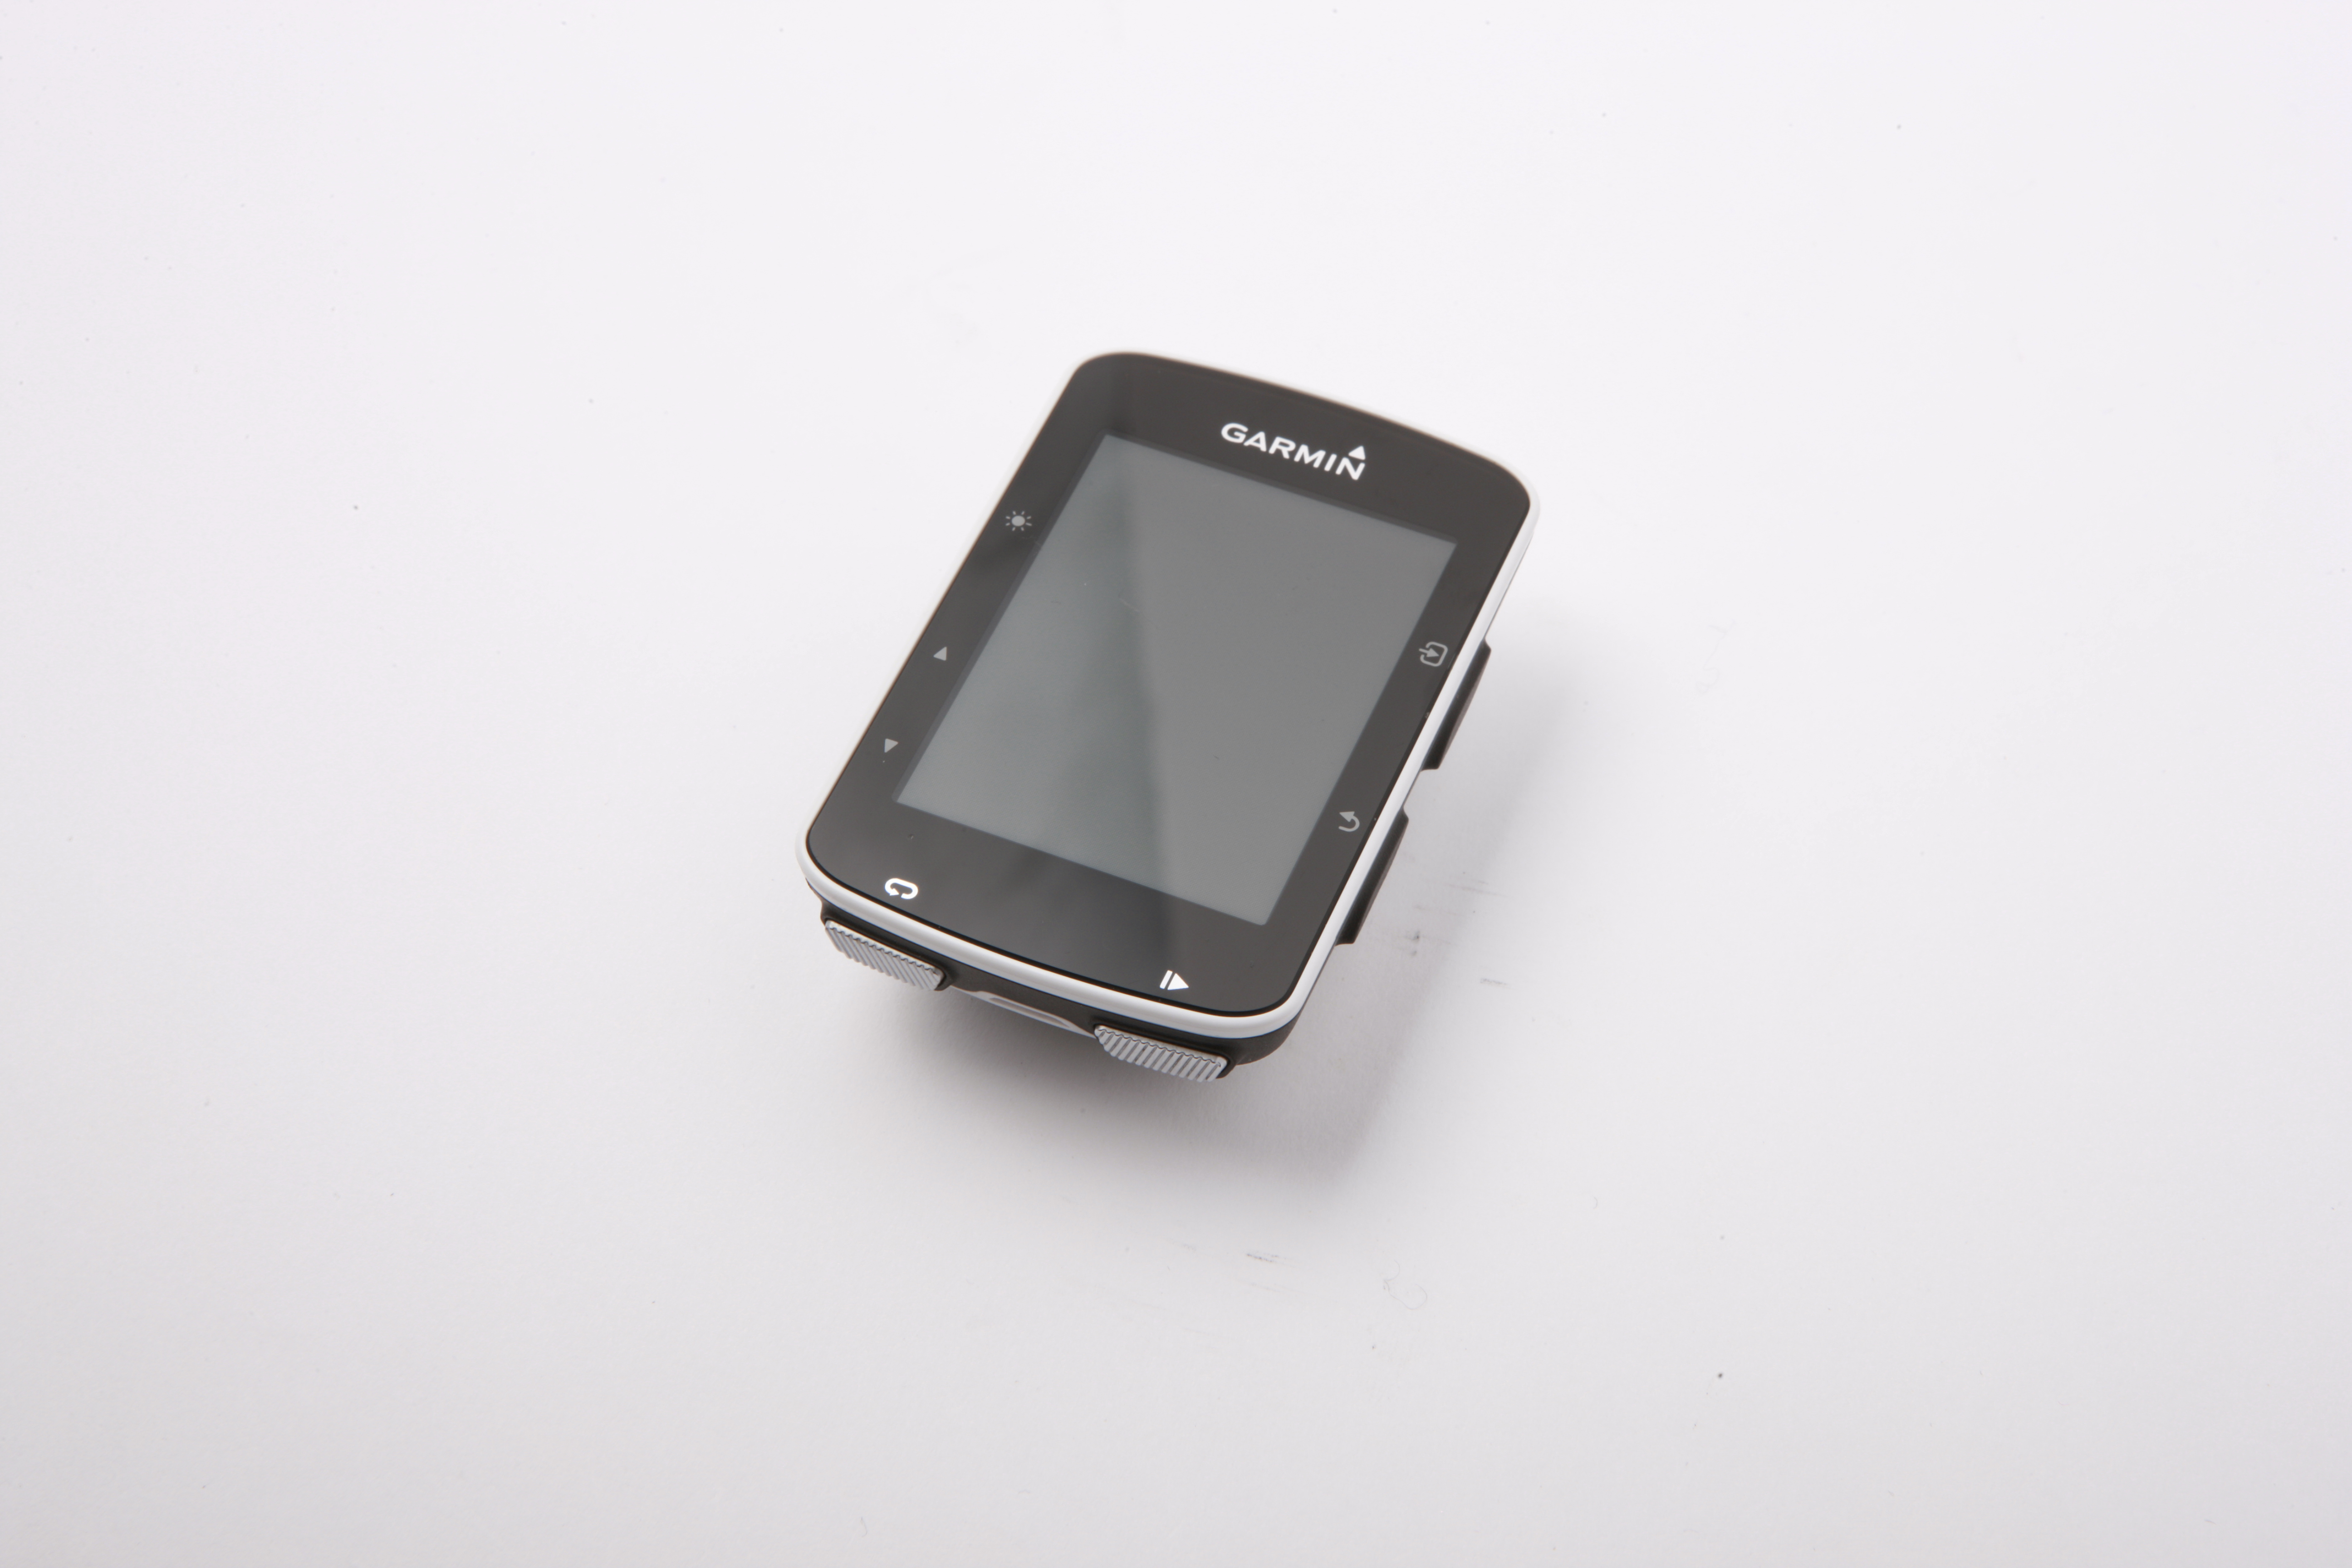 7.3cm x 4.9cm x 2.1cm Garmin Edge 520 GPS Bike Computer Without Heart Rate Monitor 